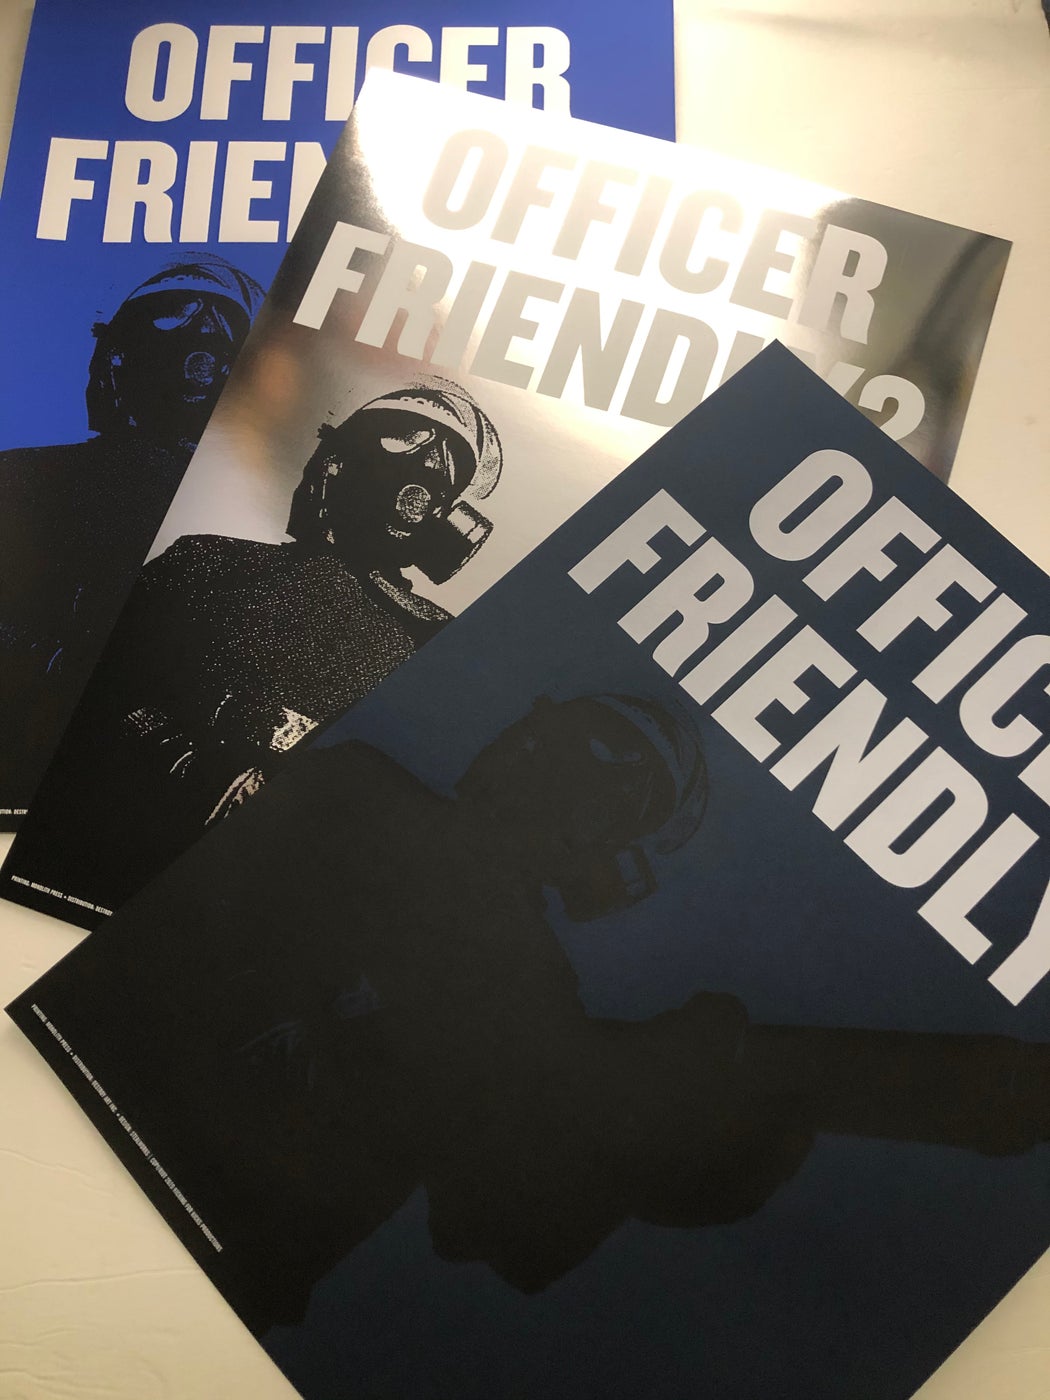 Stealworks "Officer Friendly?" Silver Foil Benefit Art Print (1991 / 2020)